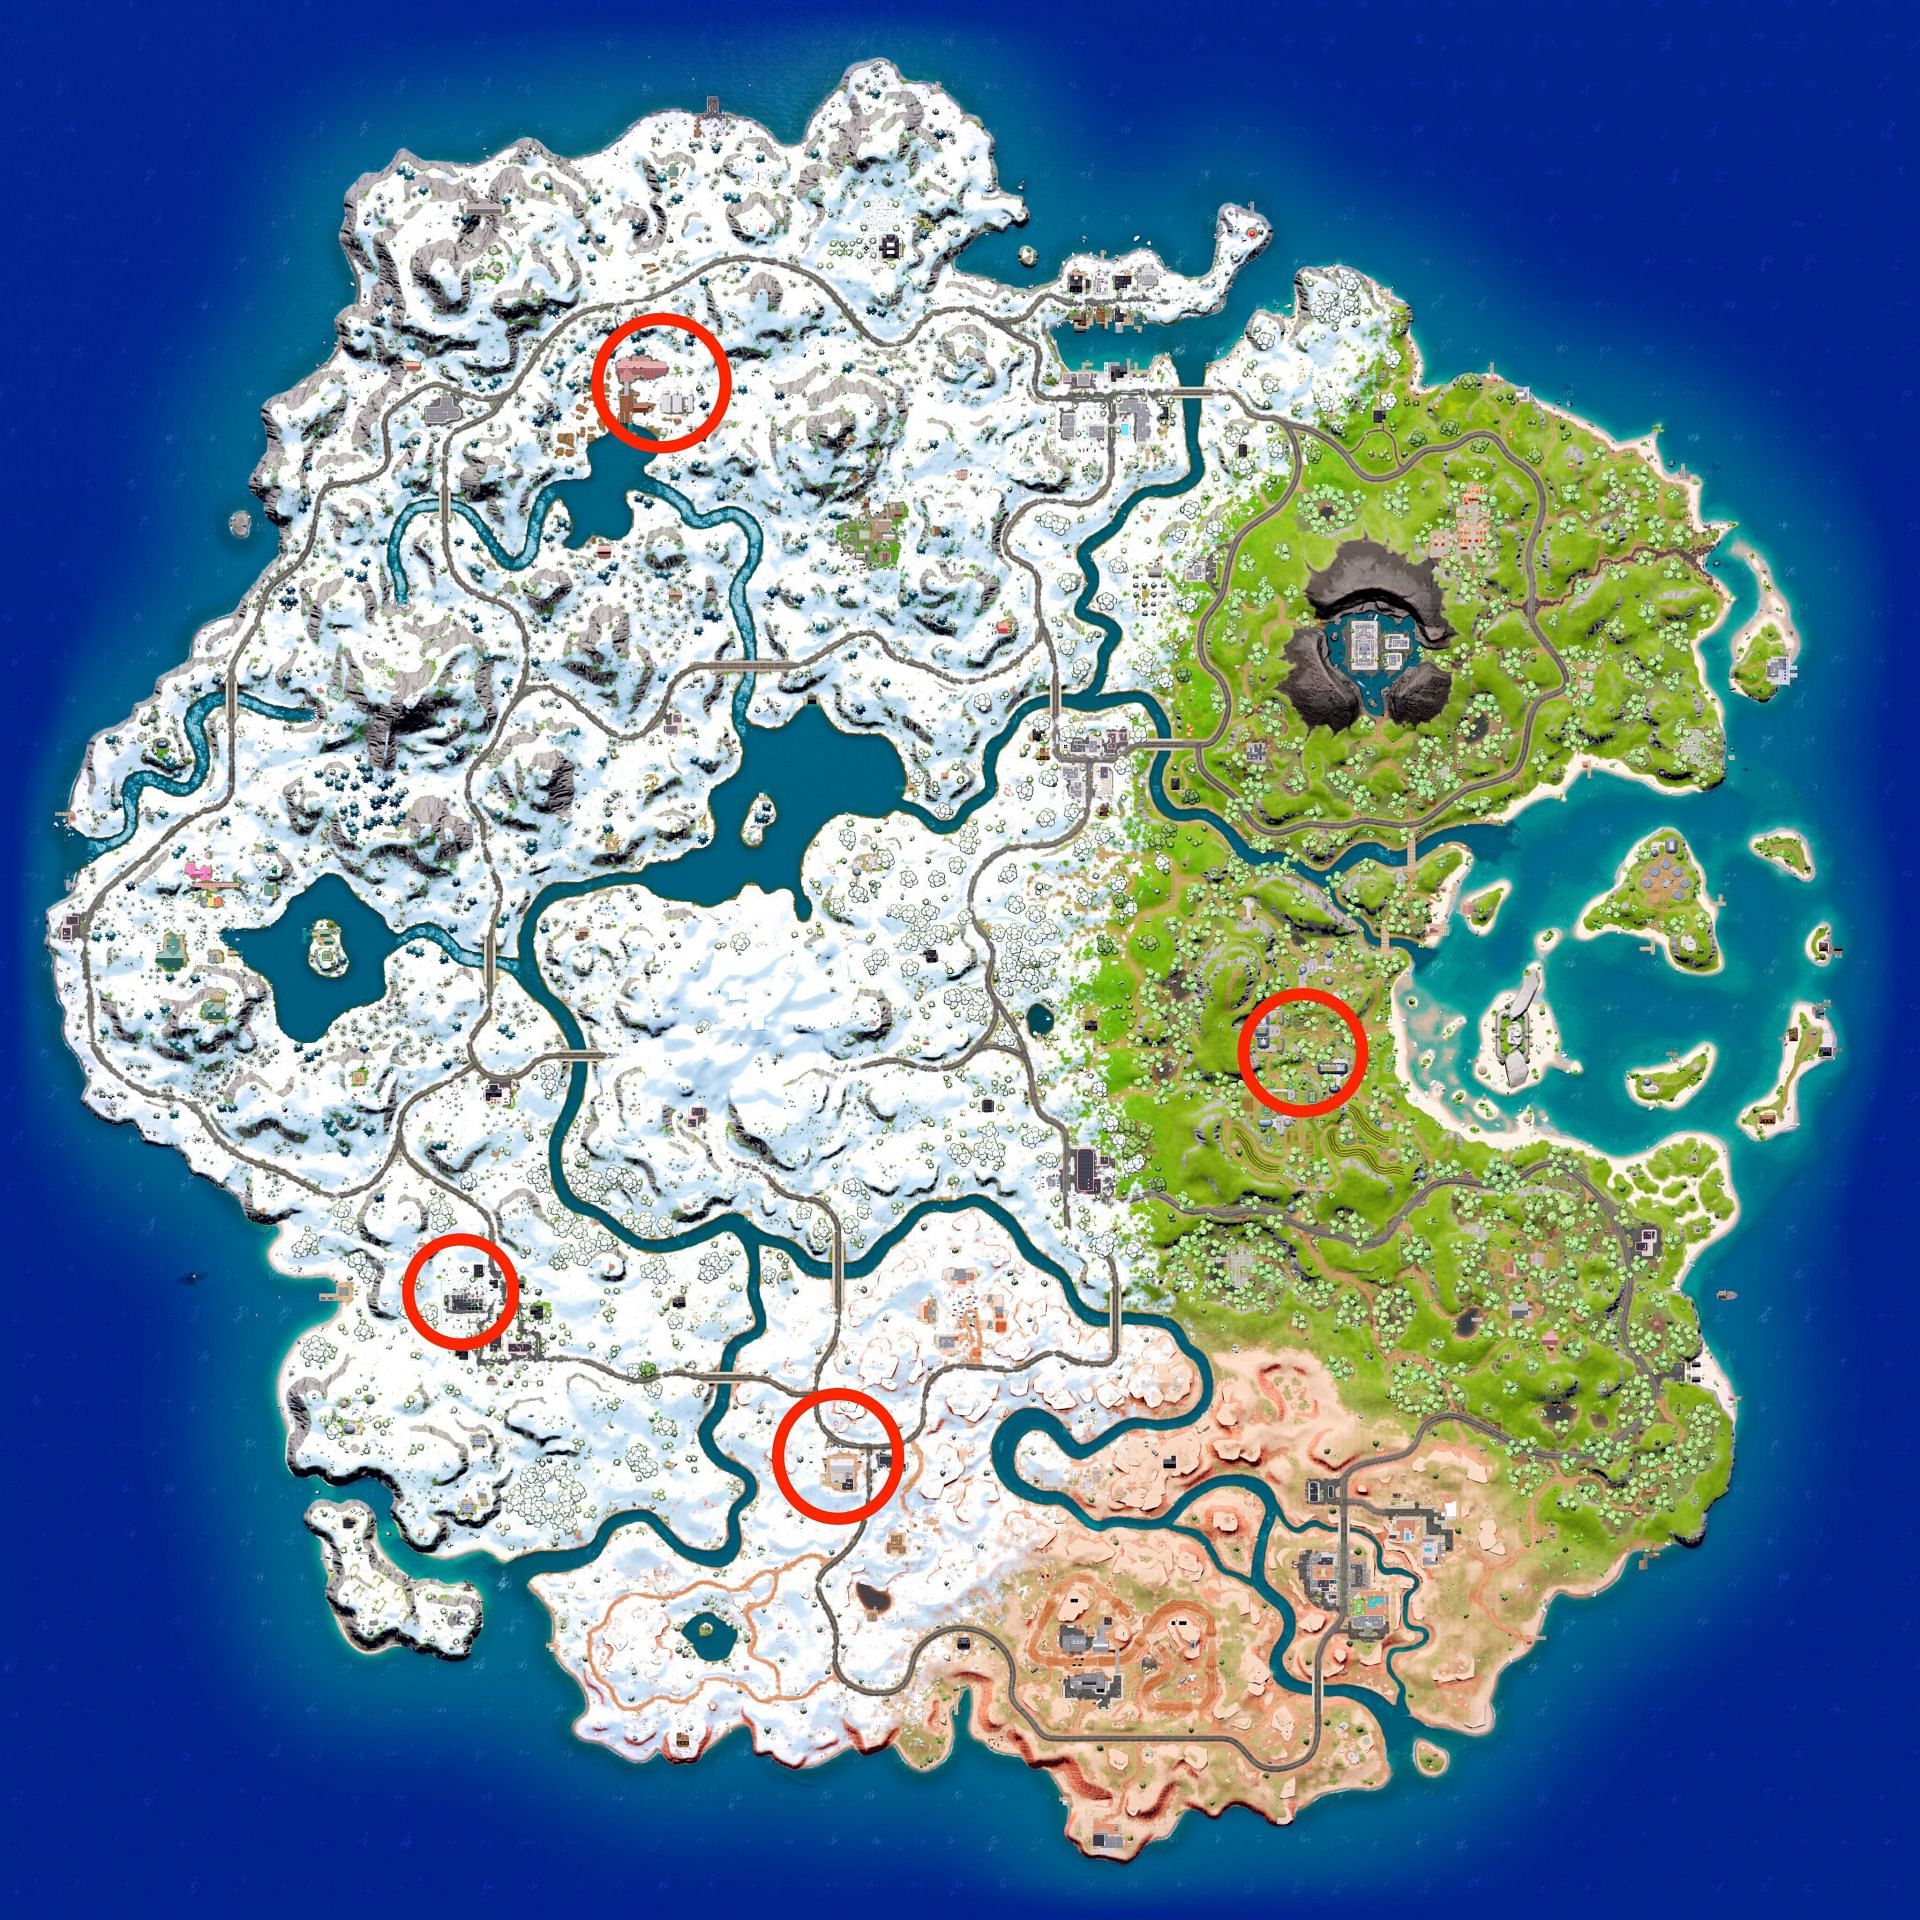 All important NPC locations in Fortnite Chapter 3 Season 1 (Image via Sportskeeda)